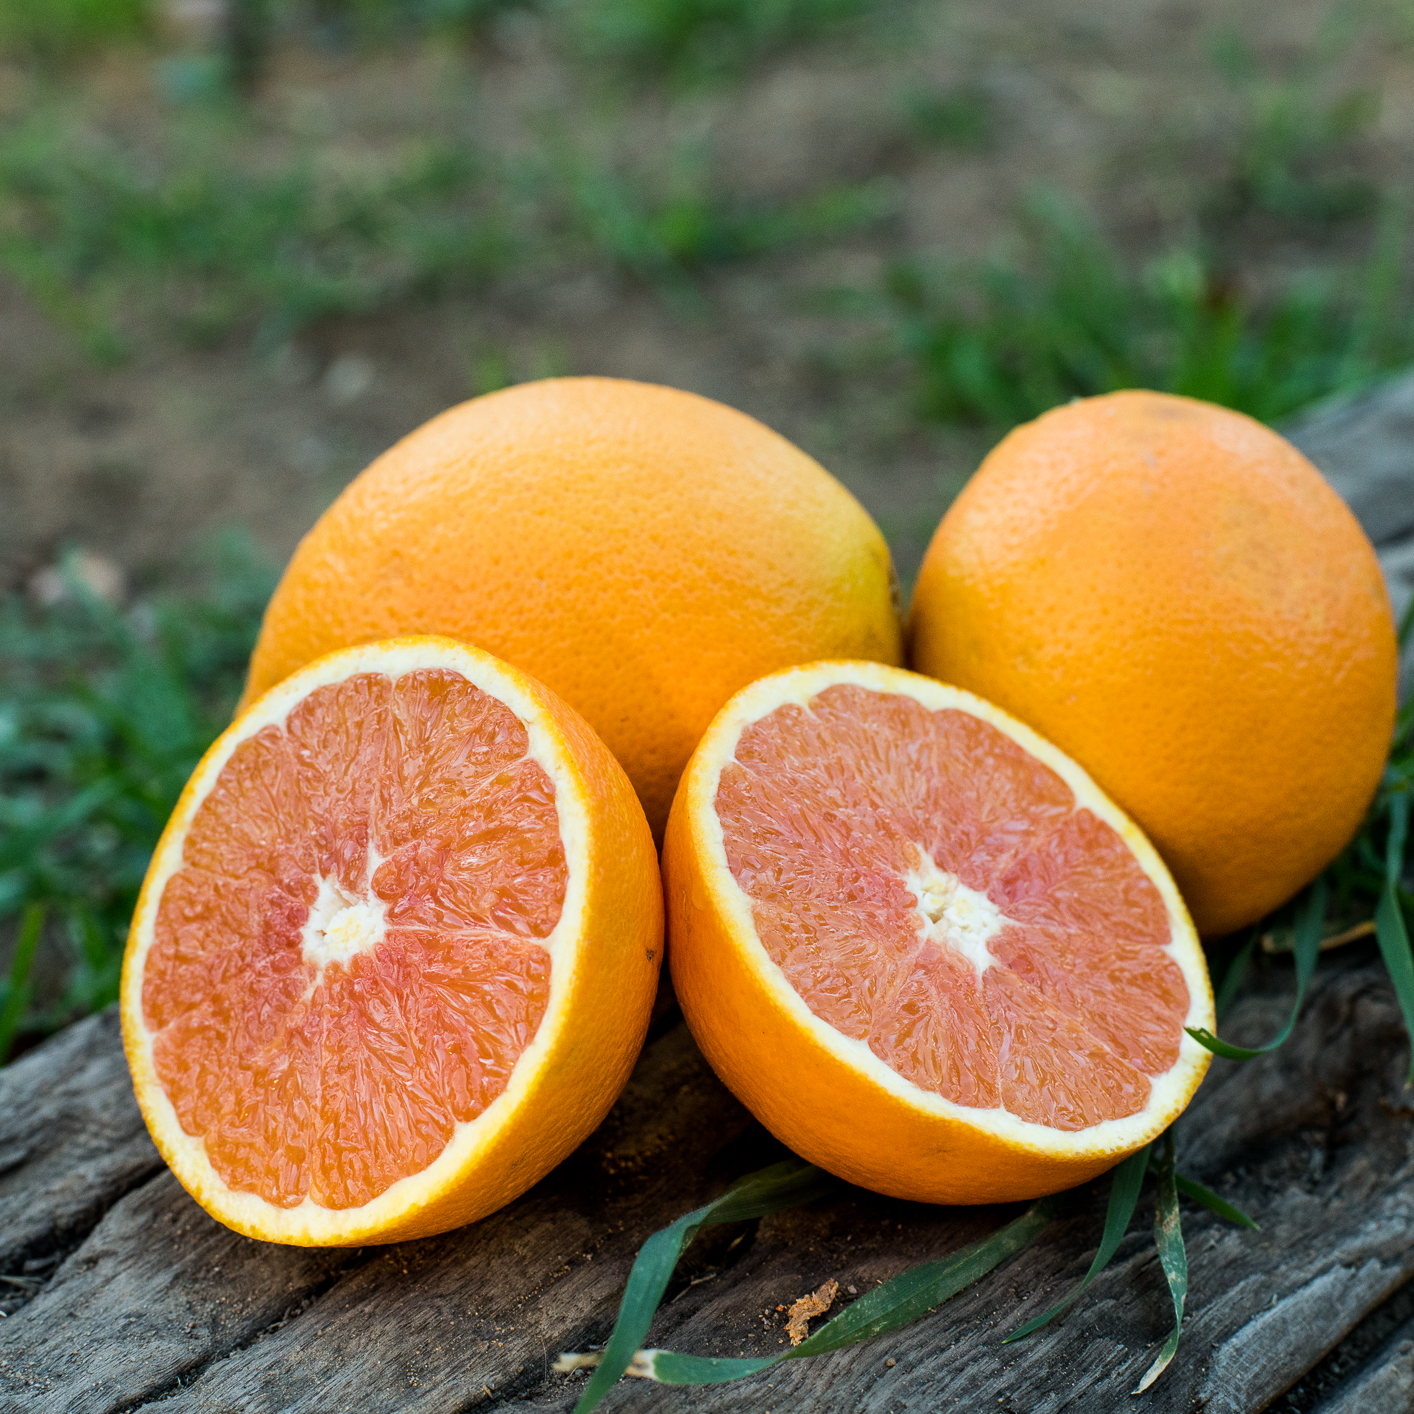 Cara Cara Oranges cut in half